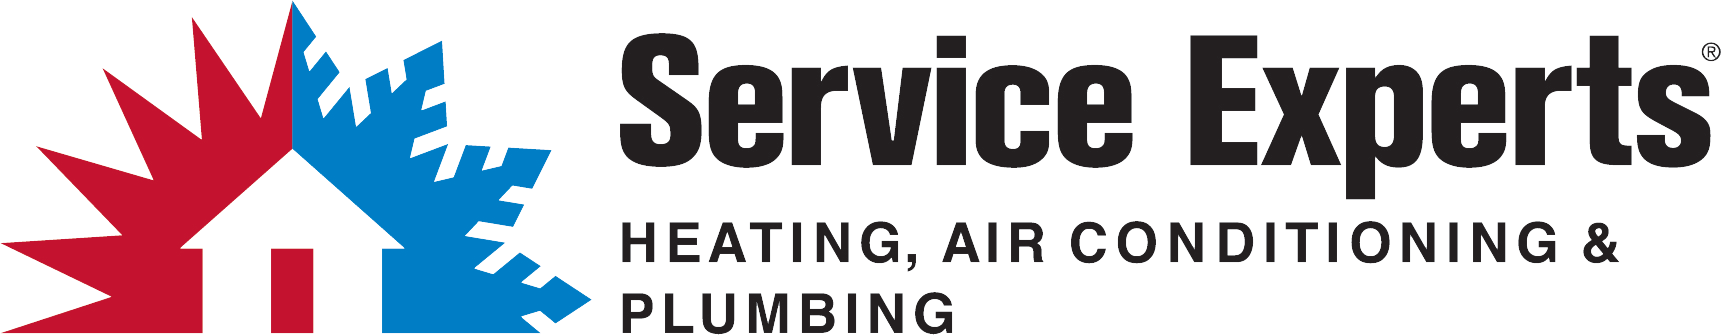 Service Experts logo